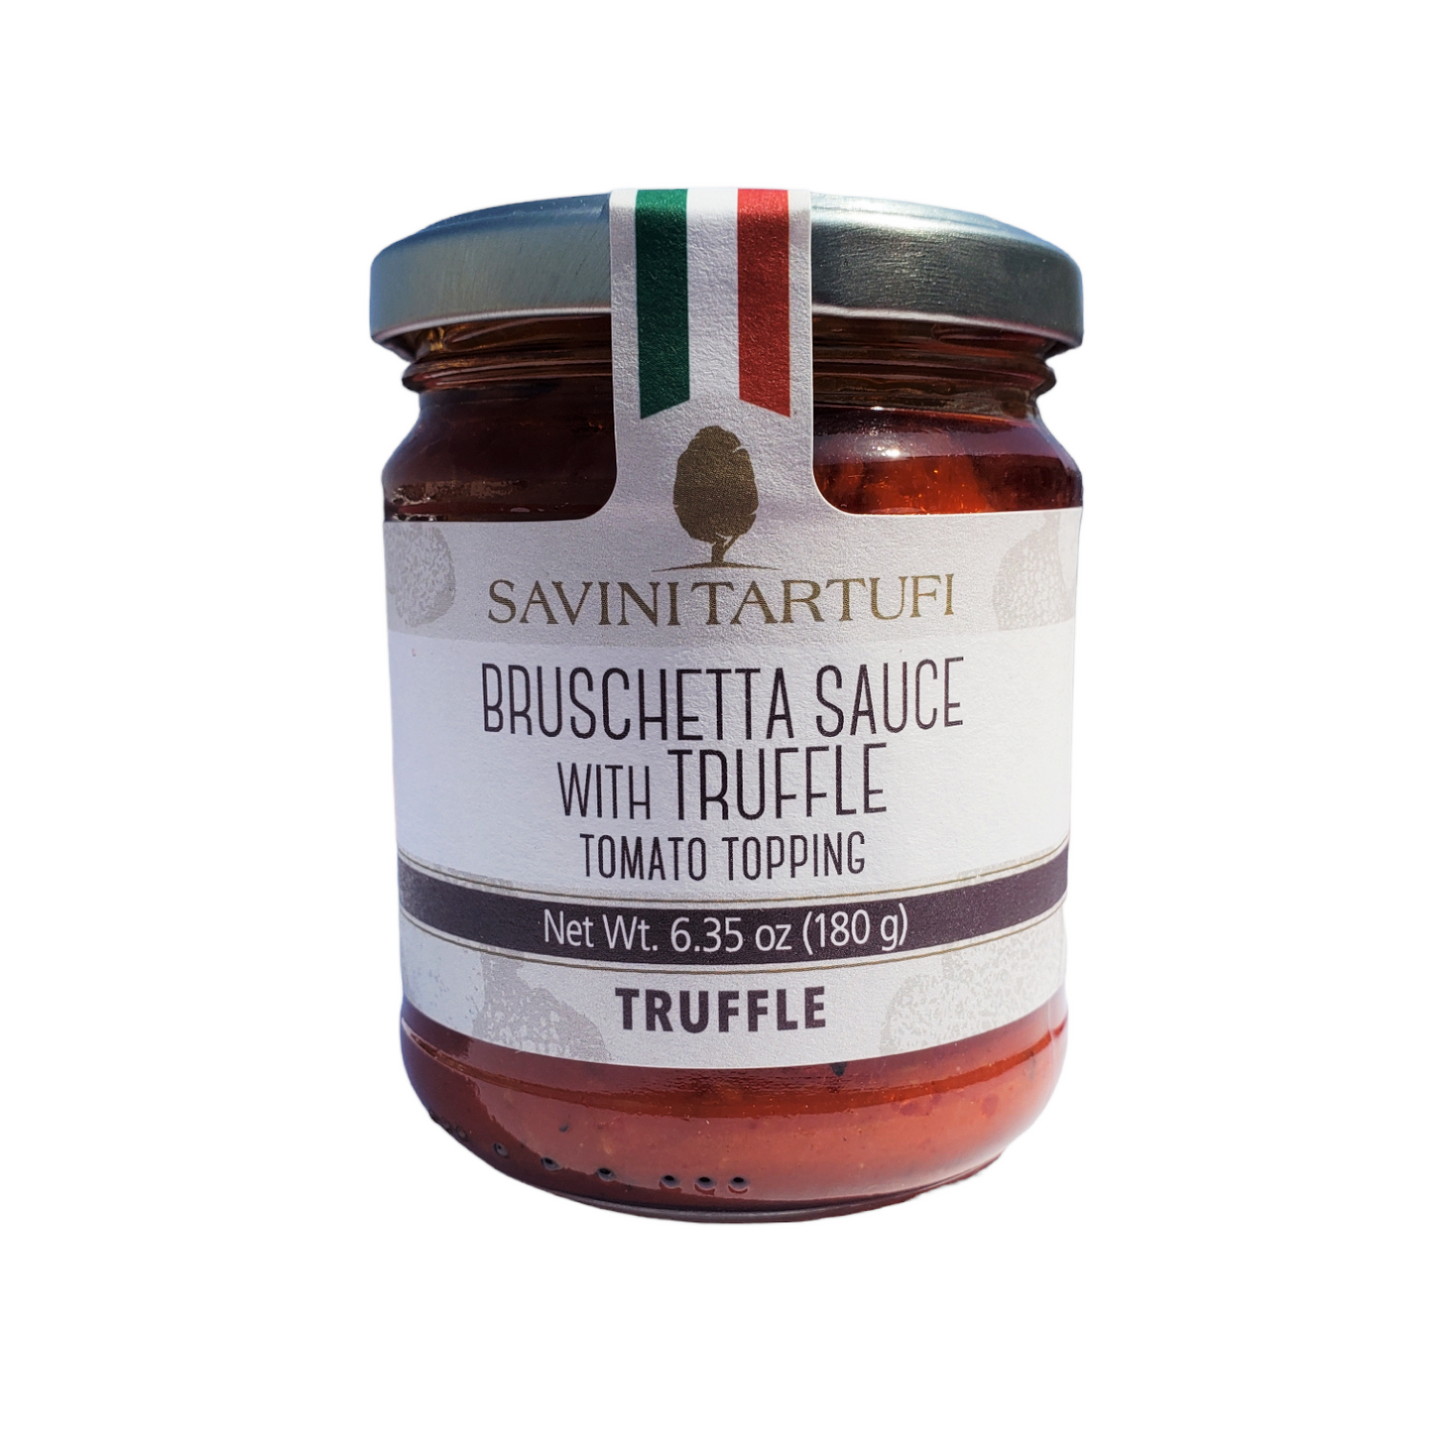 SPECIAL - NEW! "Bruschetta con Tartufo" Bruschetta Sauce with Truffle Tomato Topping by Savini Tartufi: 6.35 oz, 6/CS